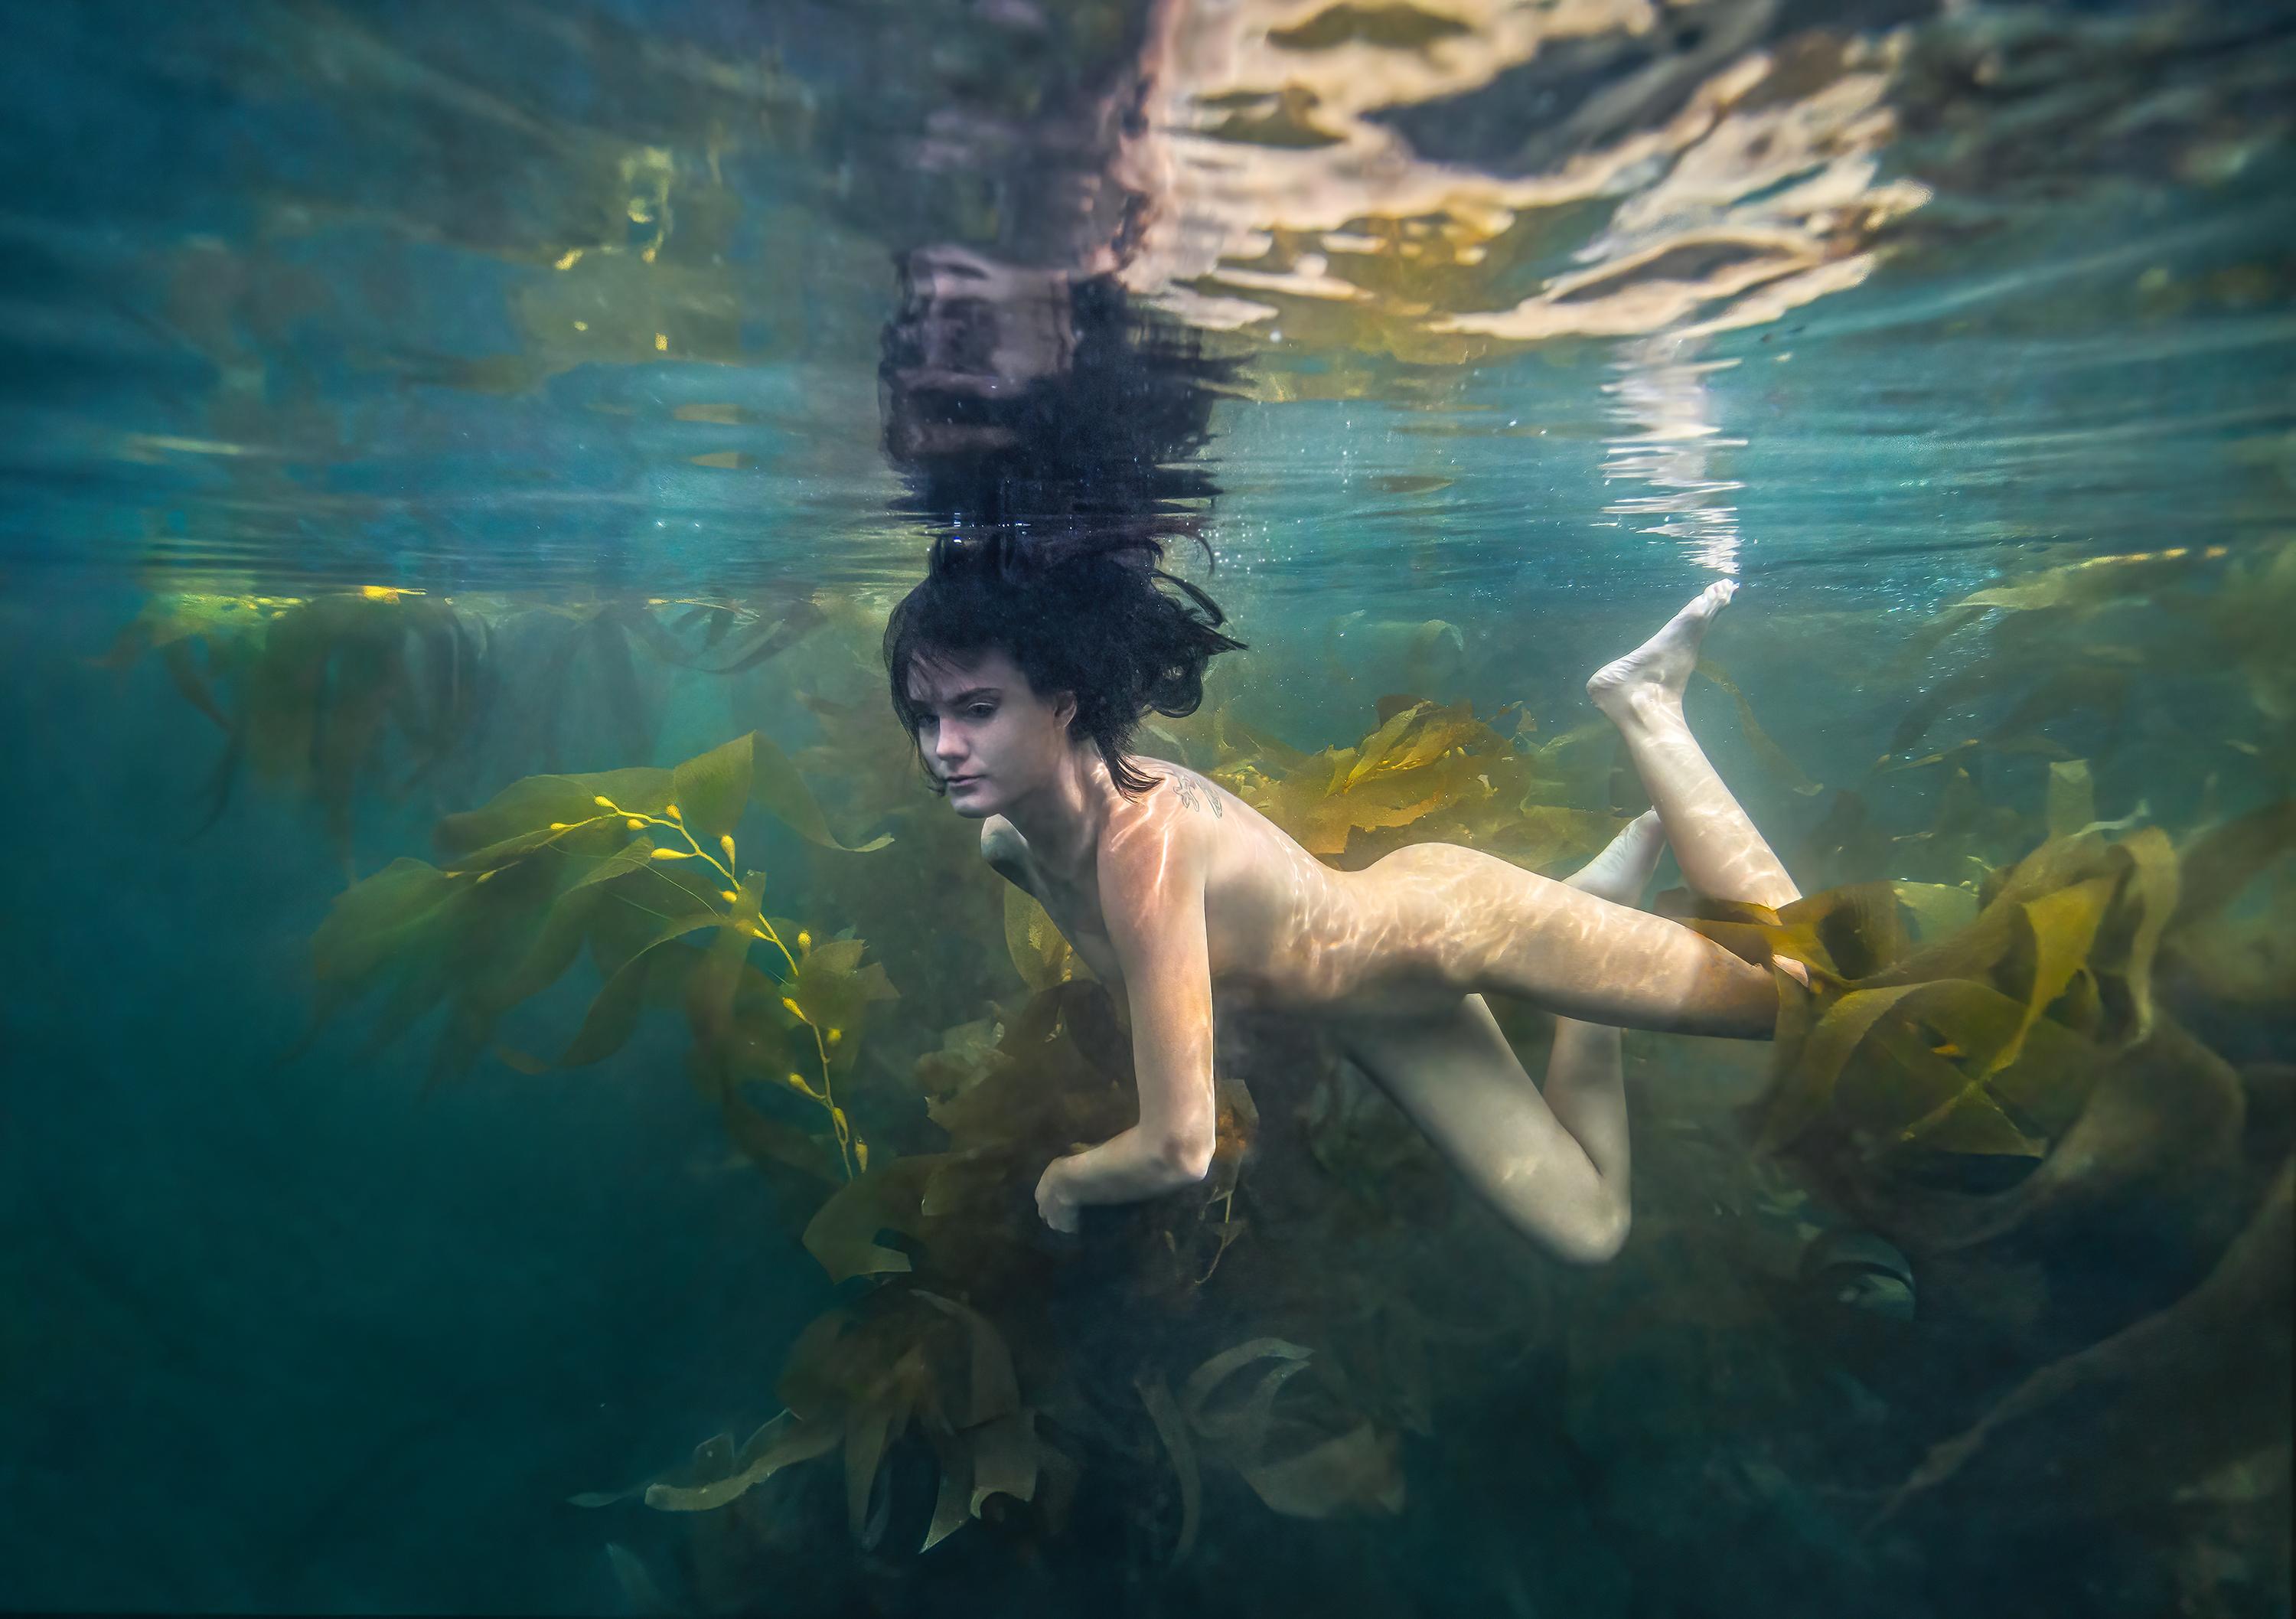 Alex Sher Color Photograph - Kelp Mermaid - underwater nude photograph - archival pigment print